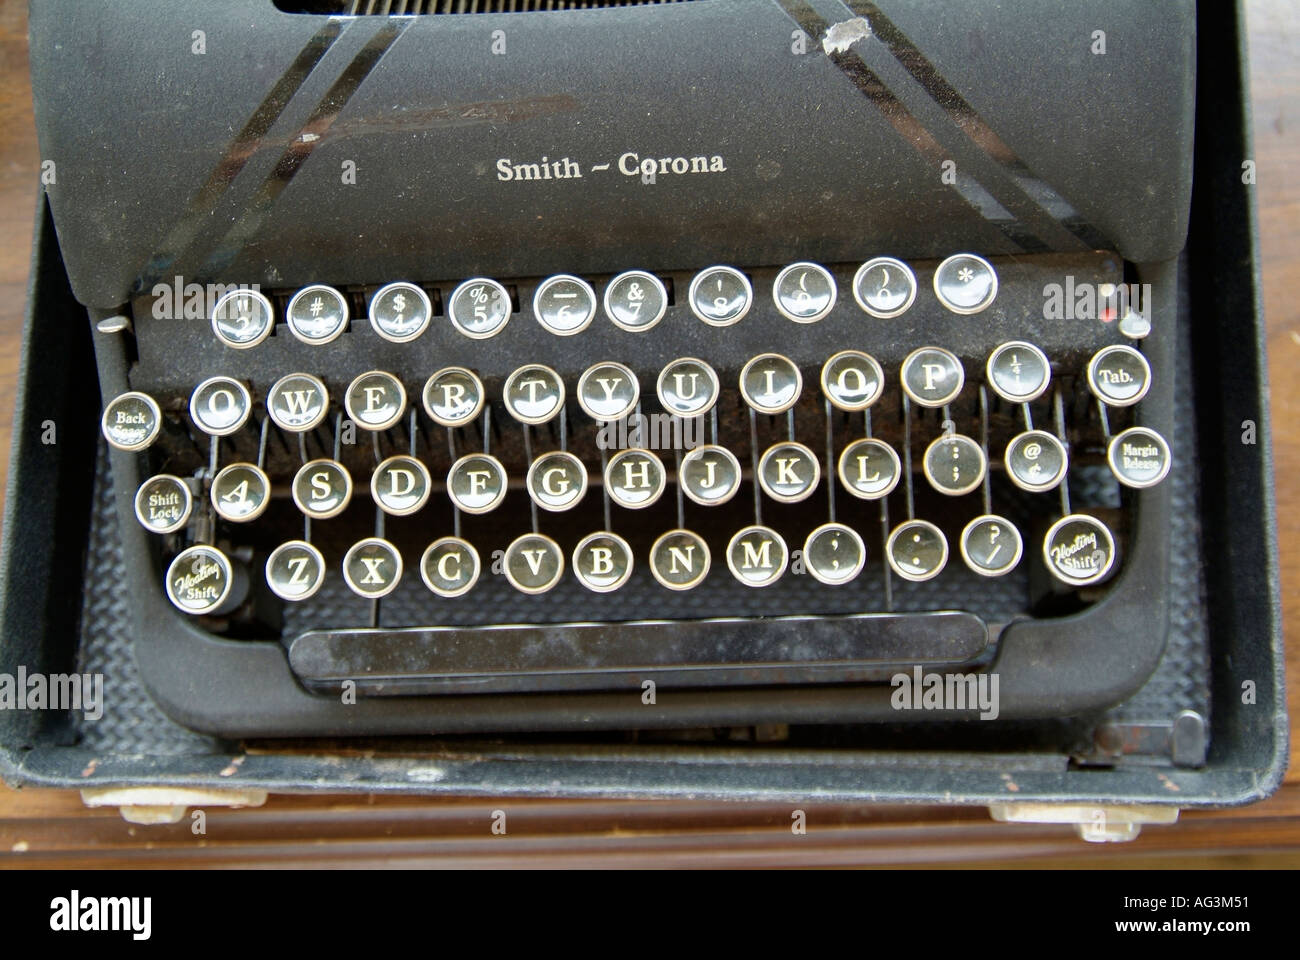 keyboard of an old Smith Corona typewriter Stock Photo - Alamy